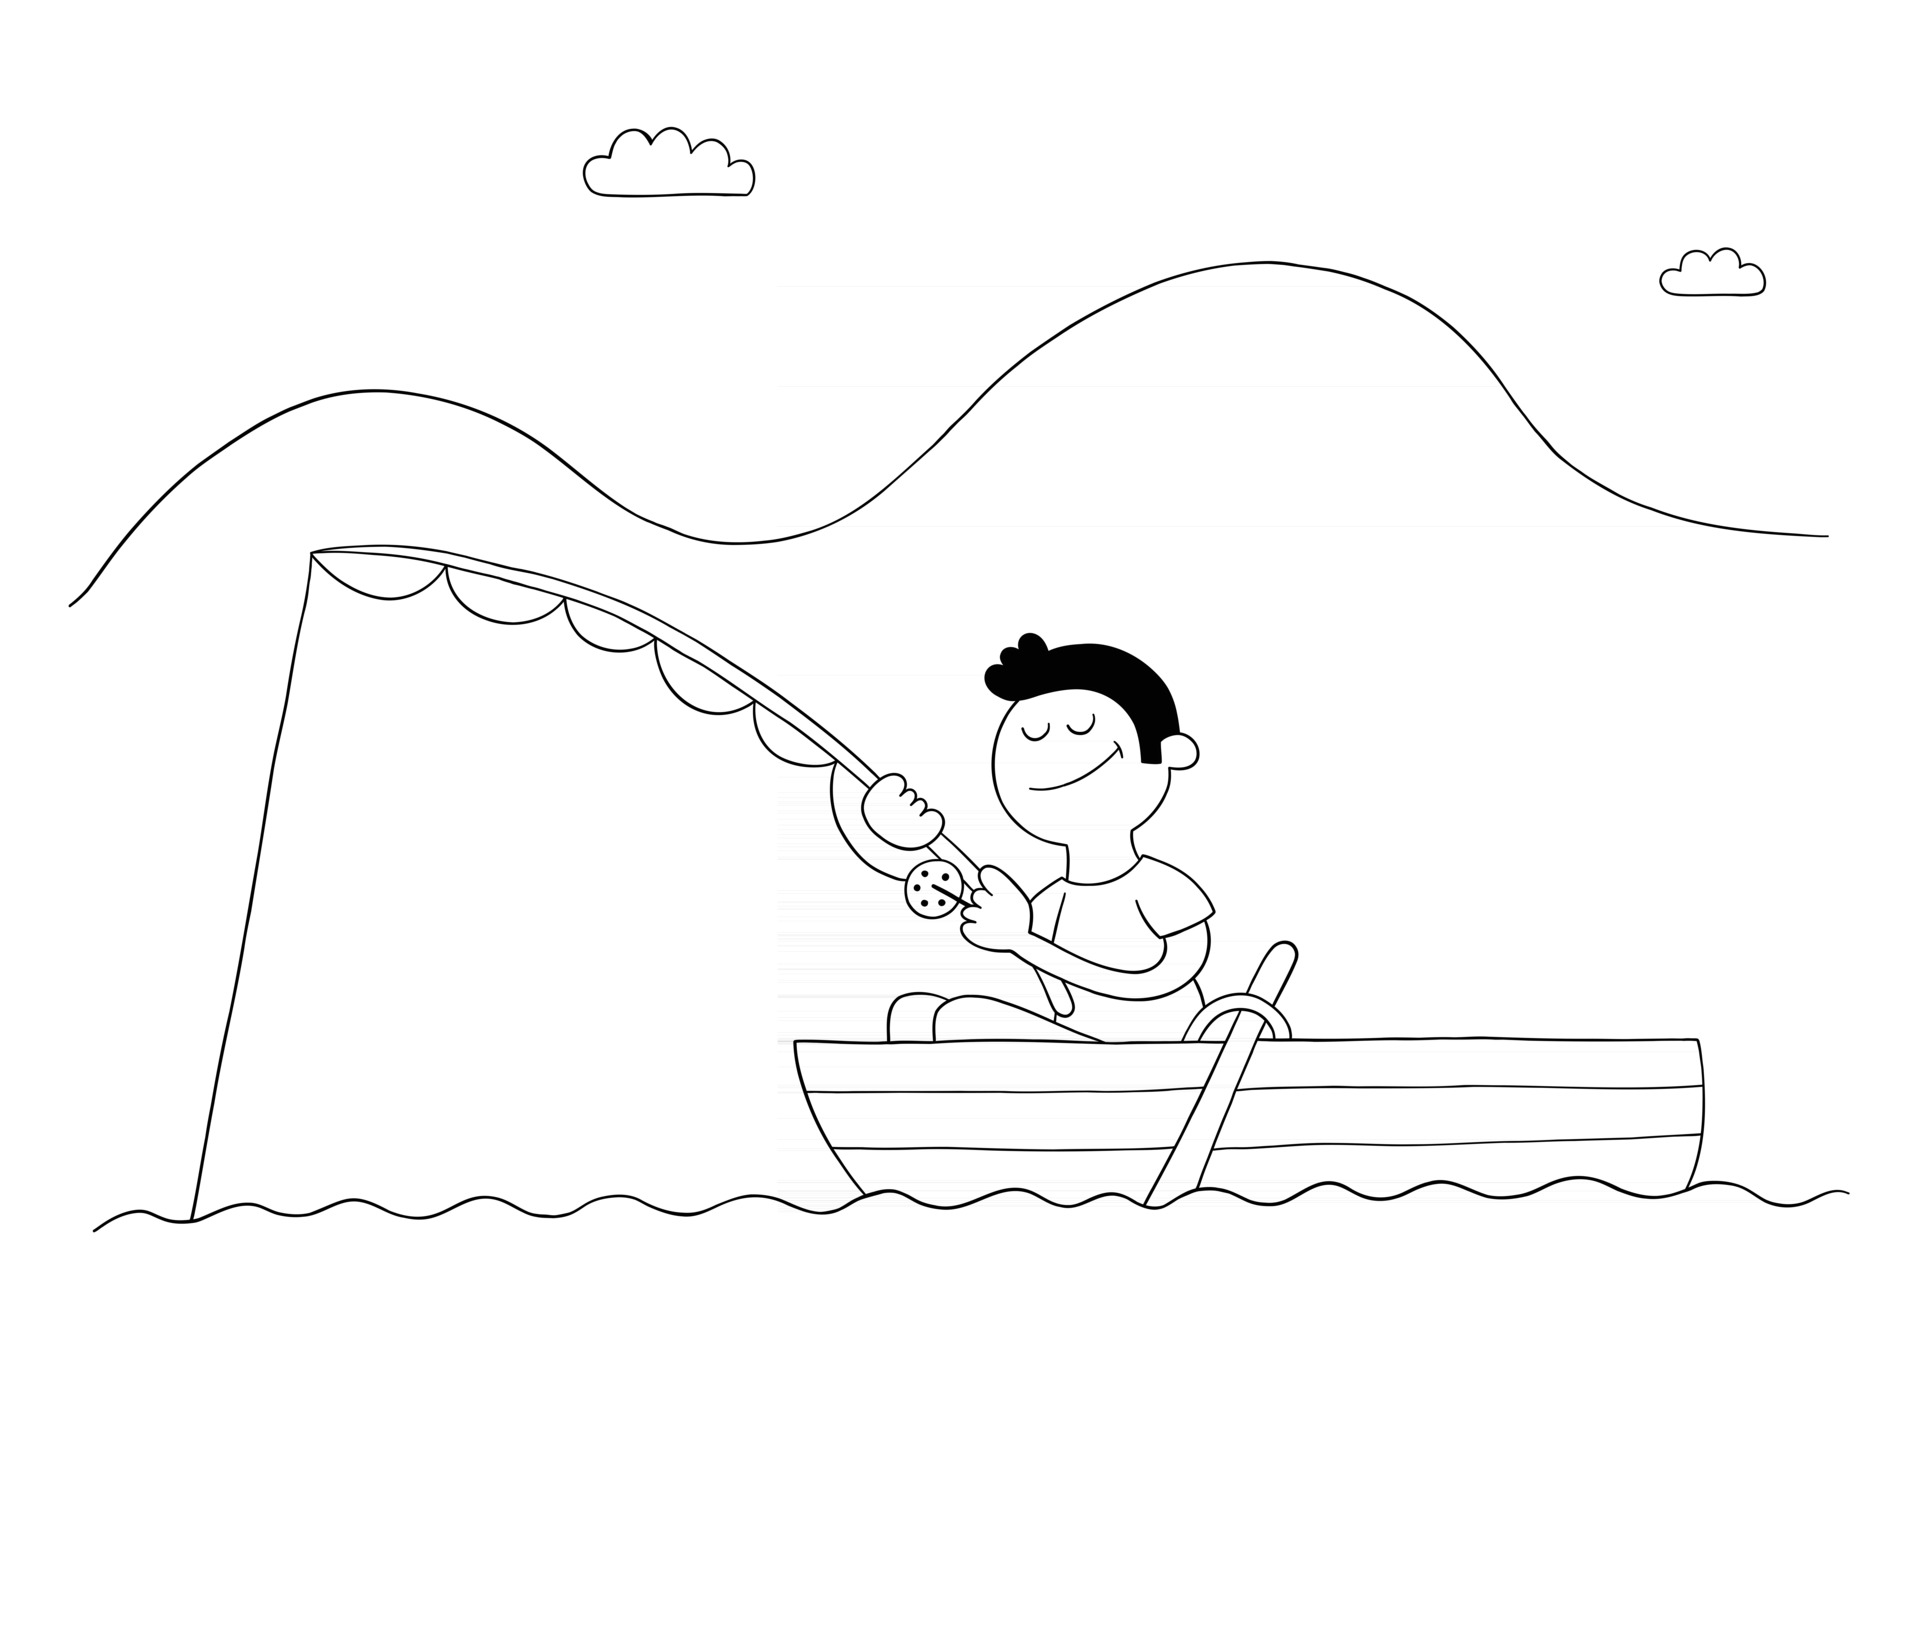 Cartoon man fishing with hook in boat, lake or sea 2959101 Vector